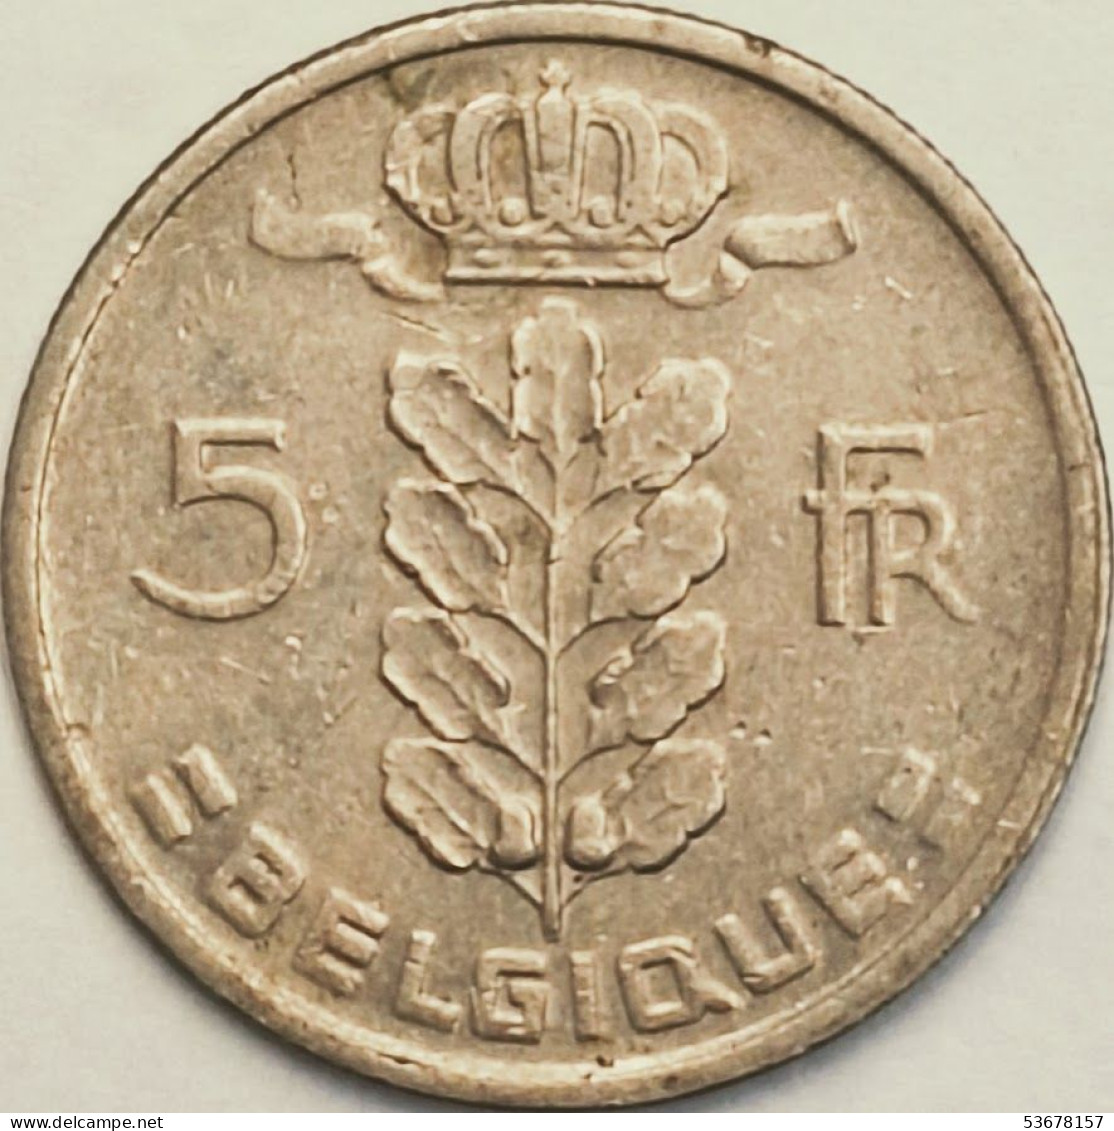 Belgium - 5 Francs 1963, KM# 134.1 (#3168) - 5 Frank